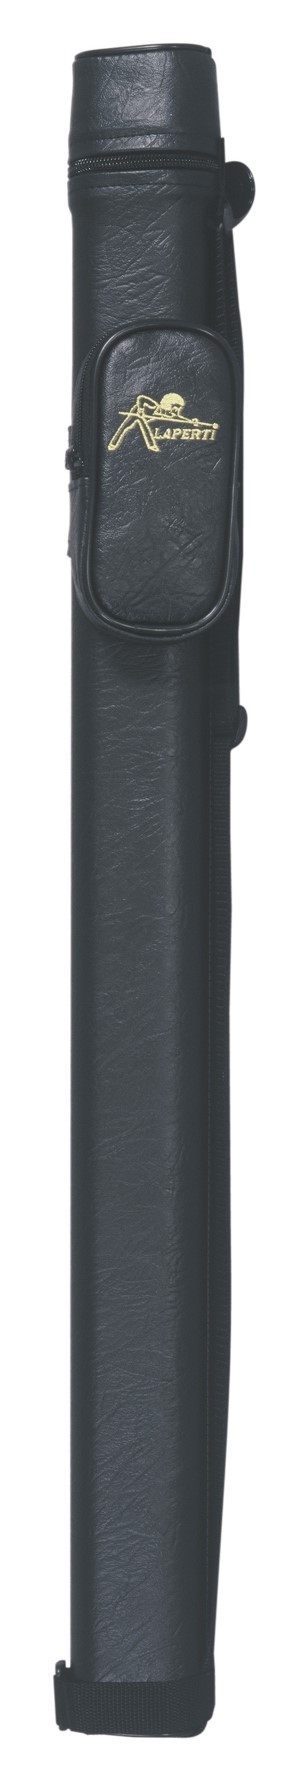 Etui de queue de billard Laperti Noir 4×8